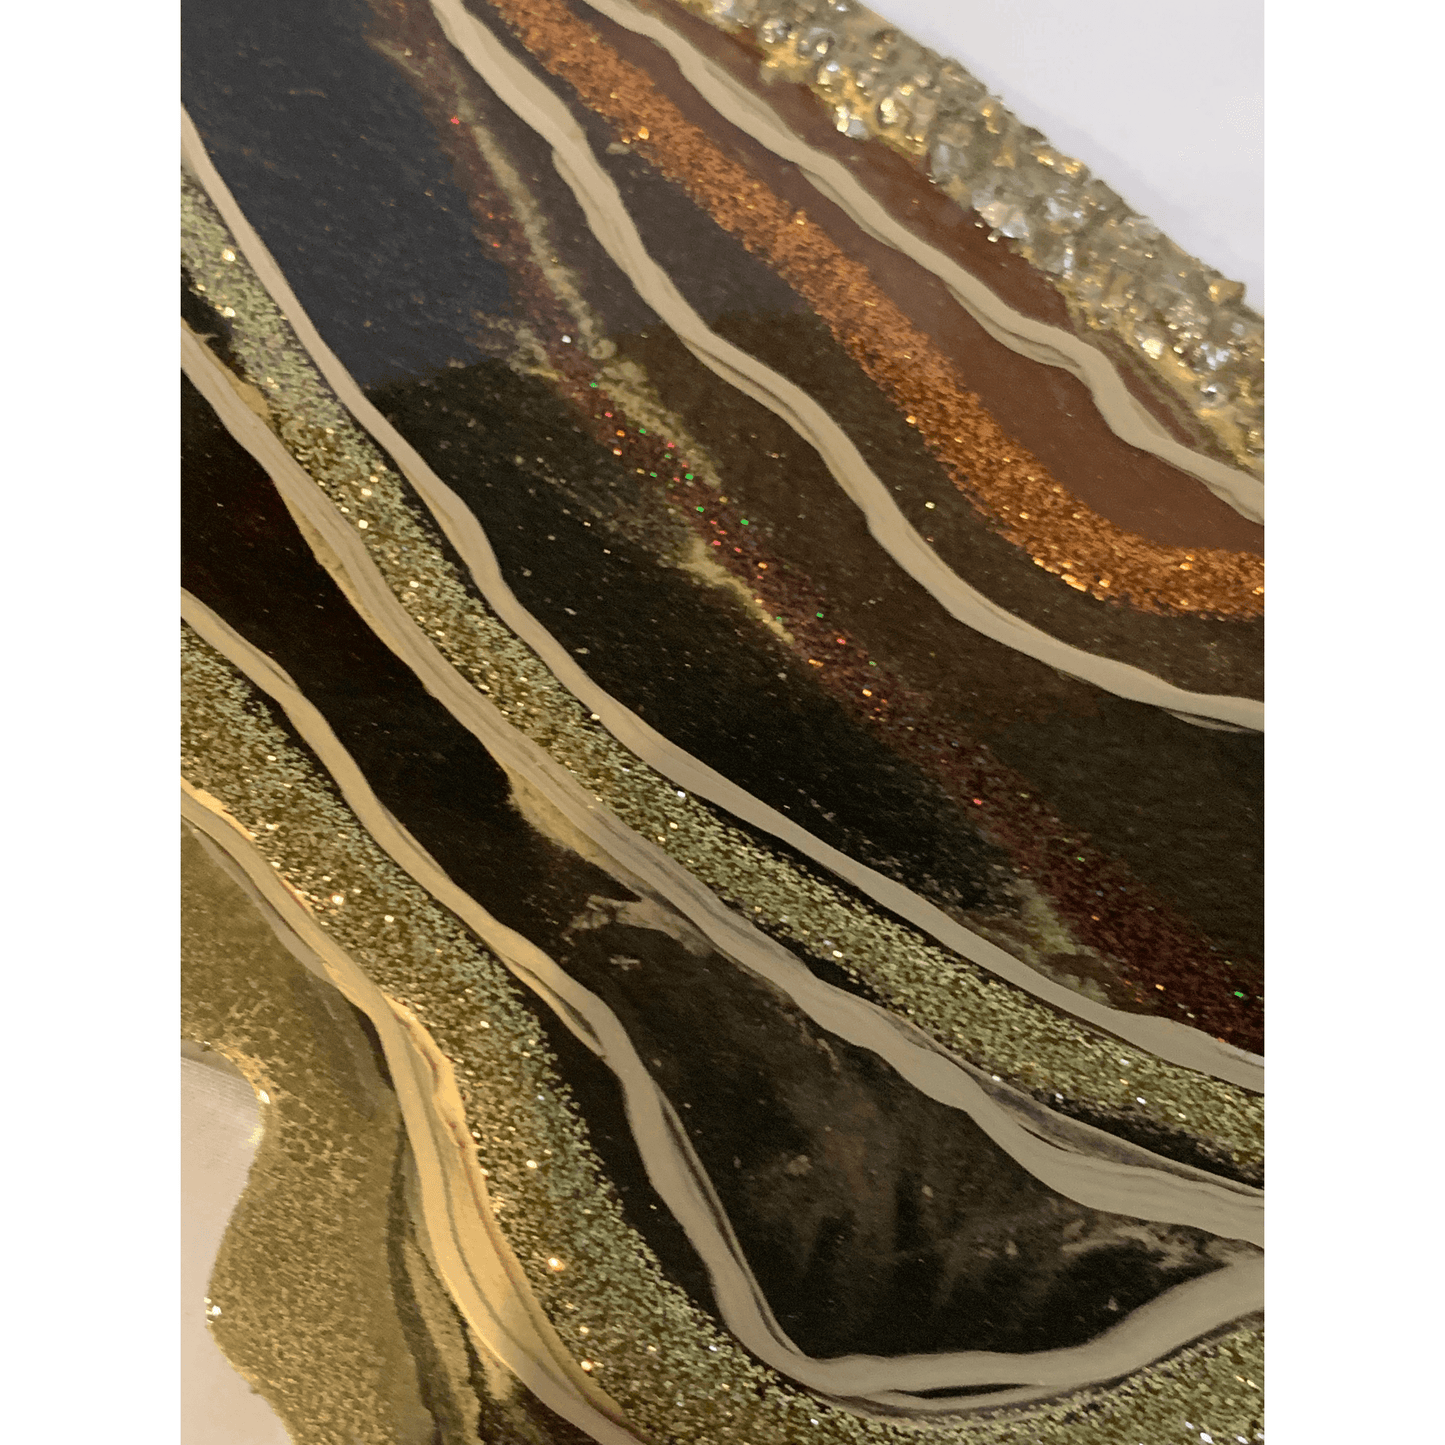 BRONZE GOLD BLACK & BROWN GEODE Modern Resin Art